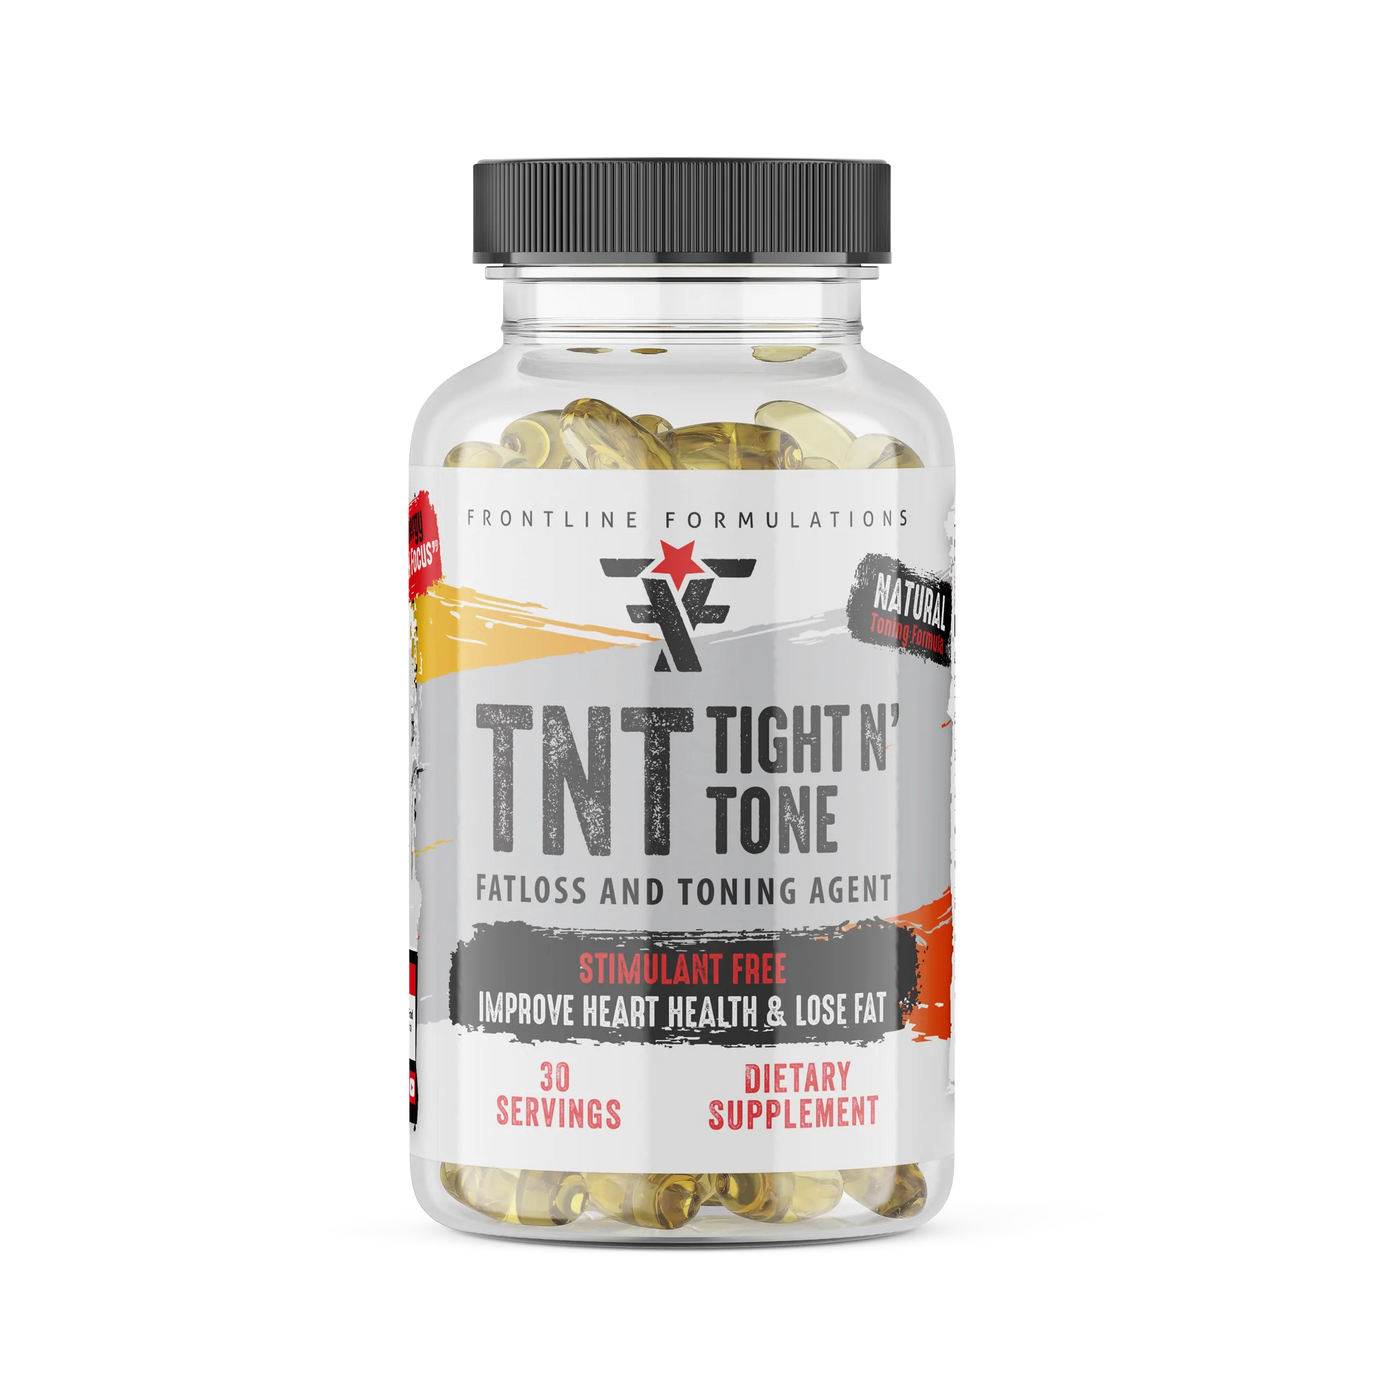 Frontline Formulations | TNT Tight-N-Tone